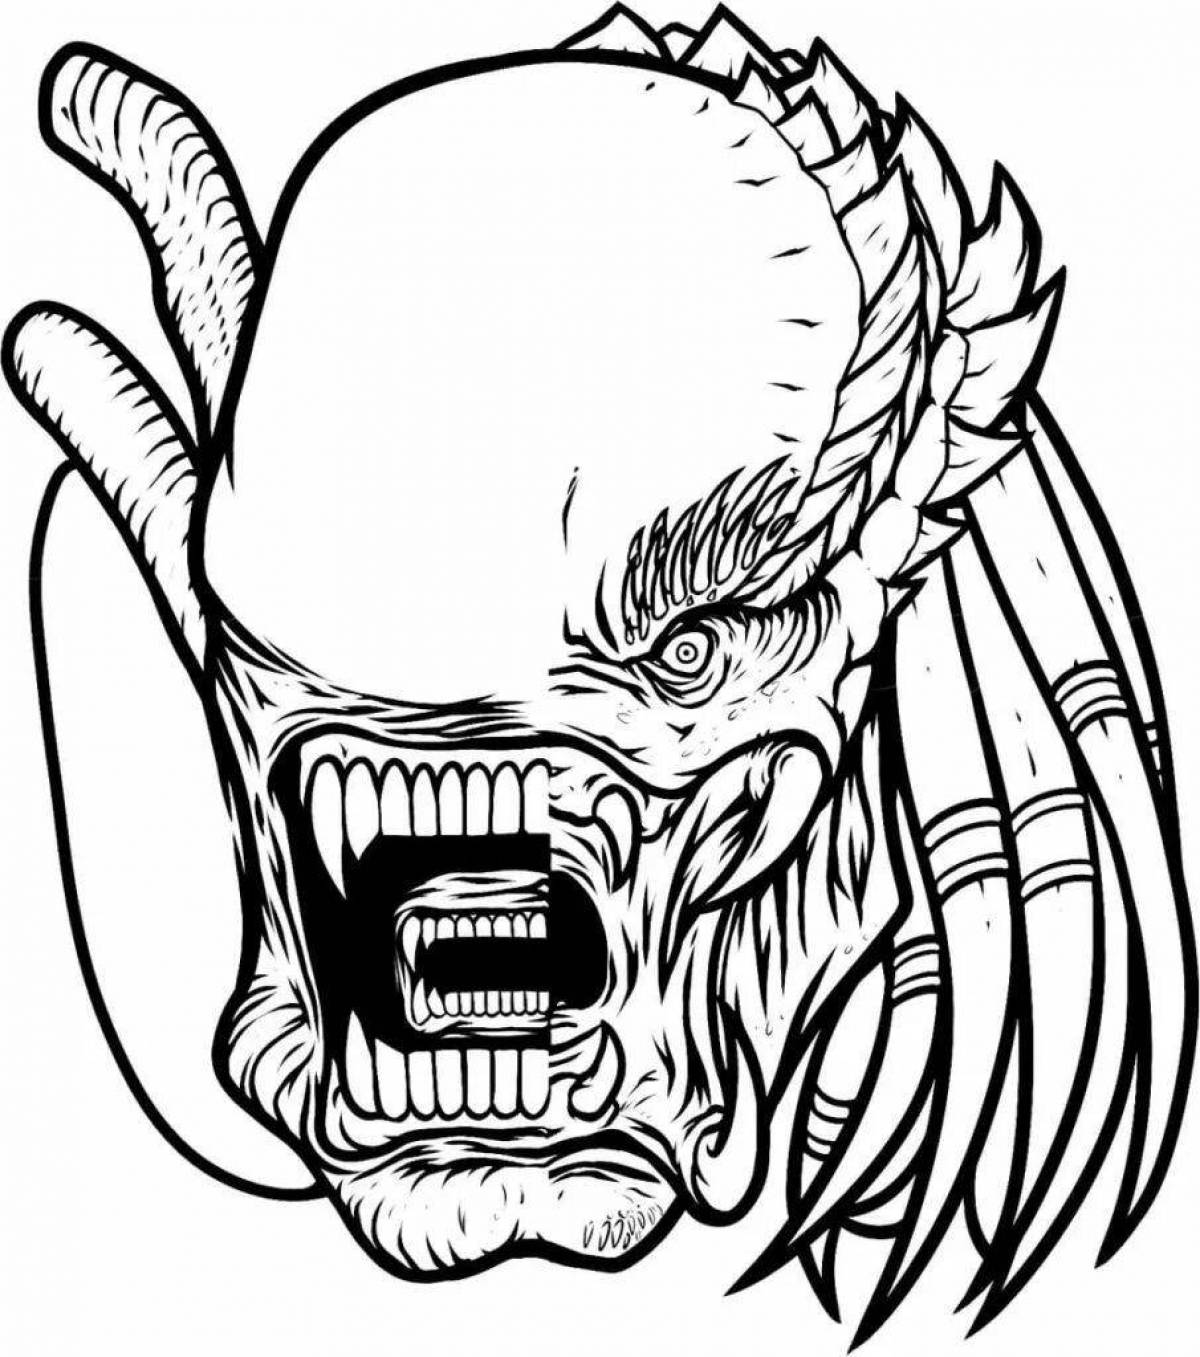 Imaginative alien and predator coloring page